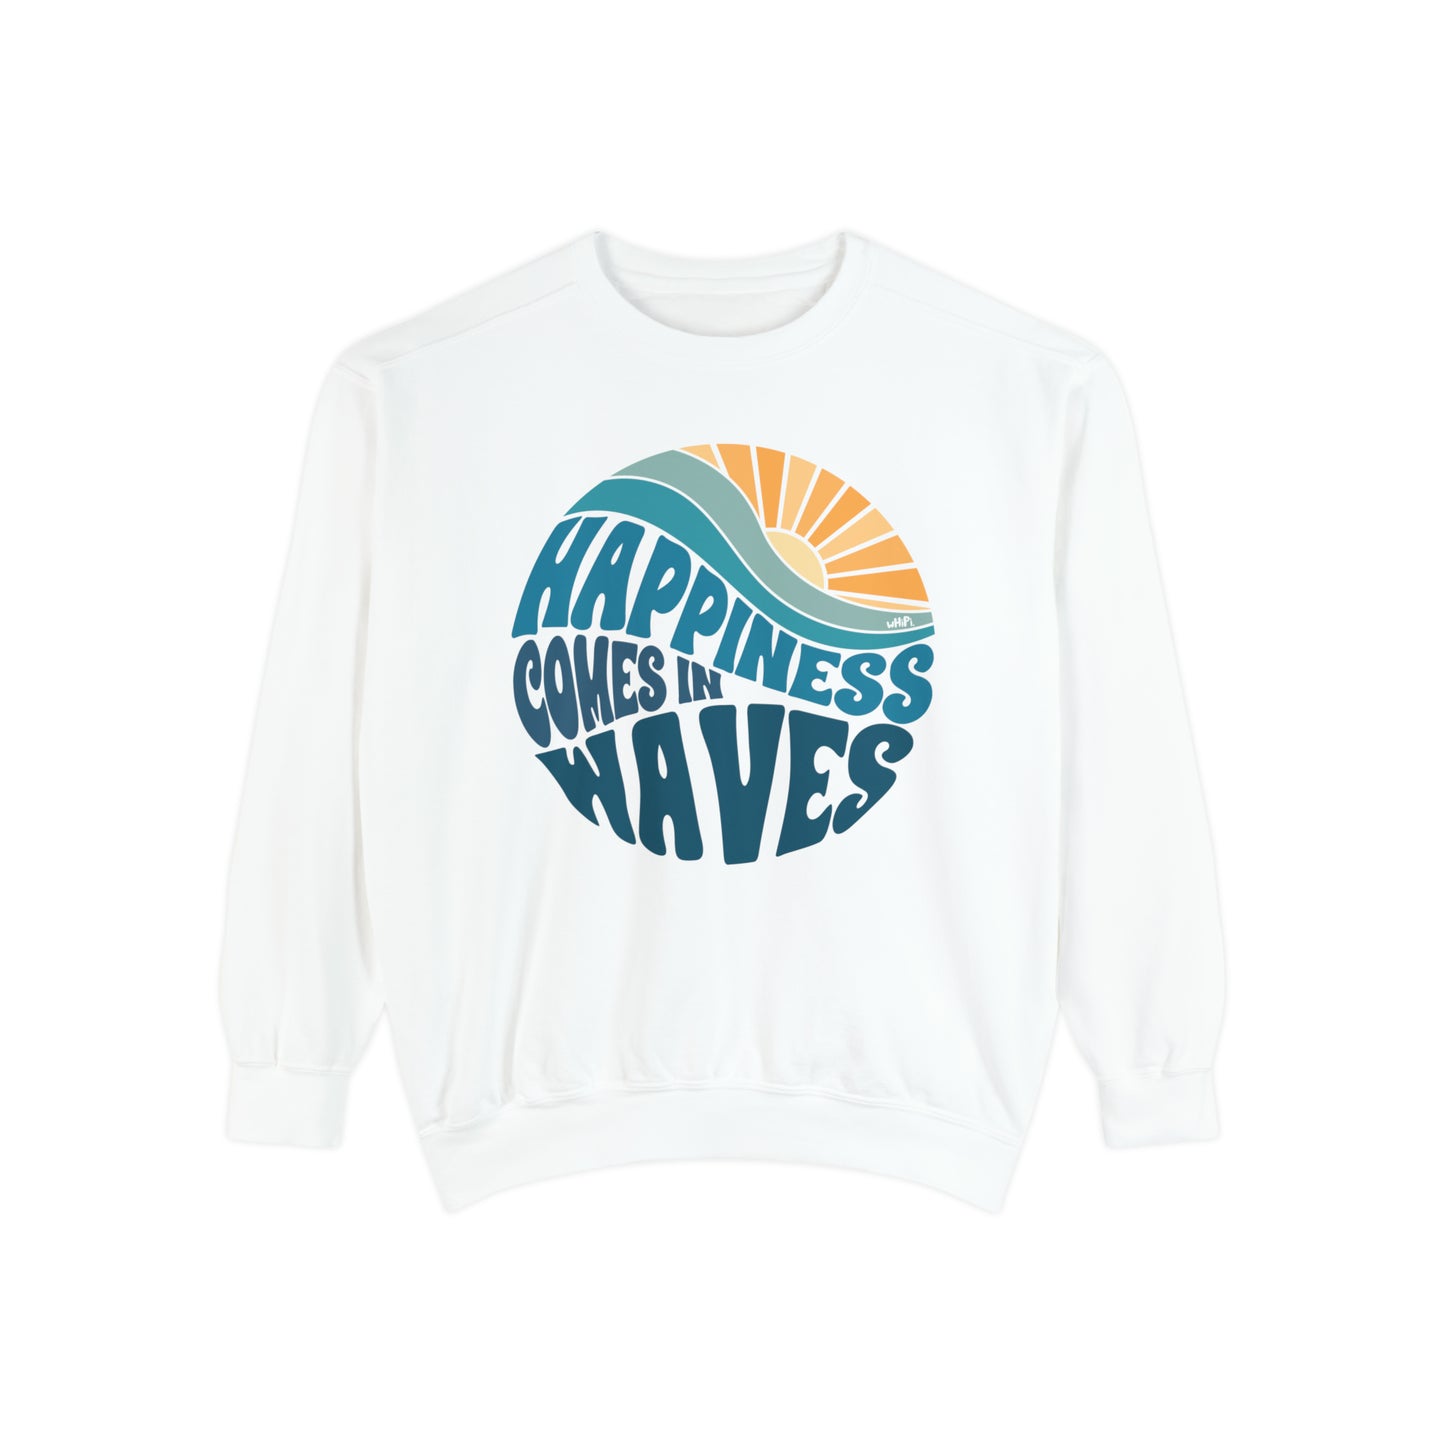 Happiness Comes In Waves Sweatshirt